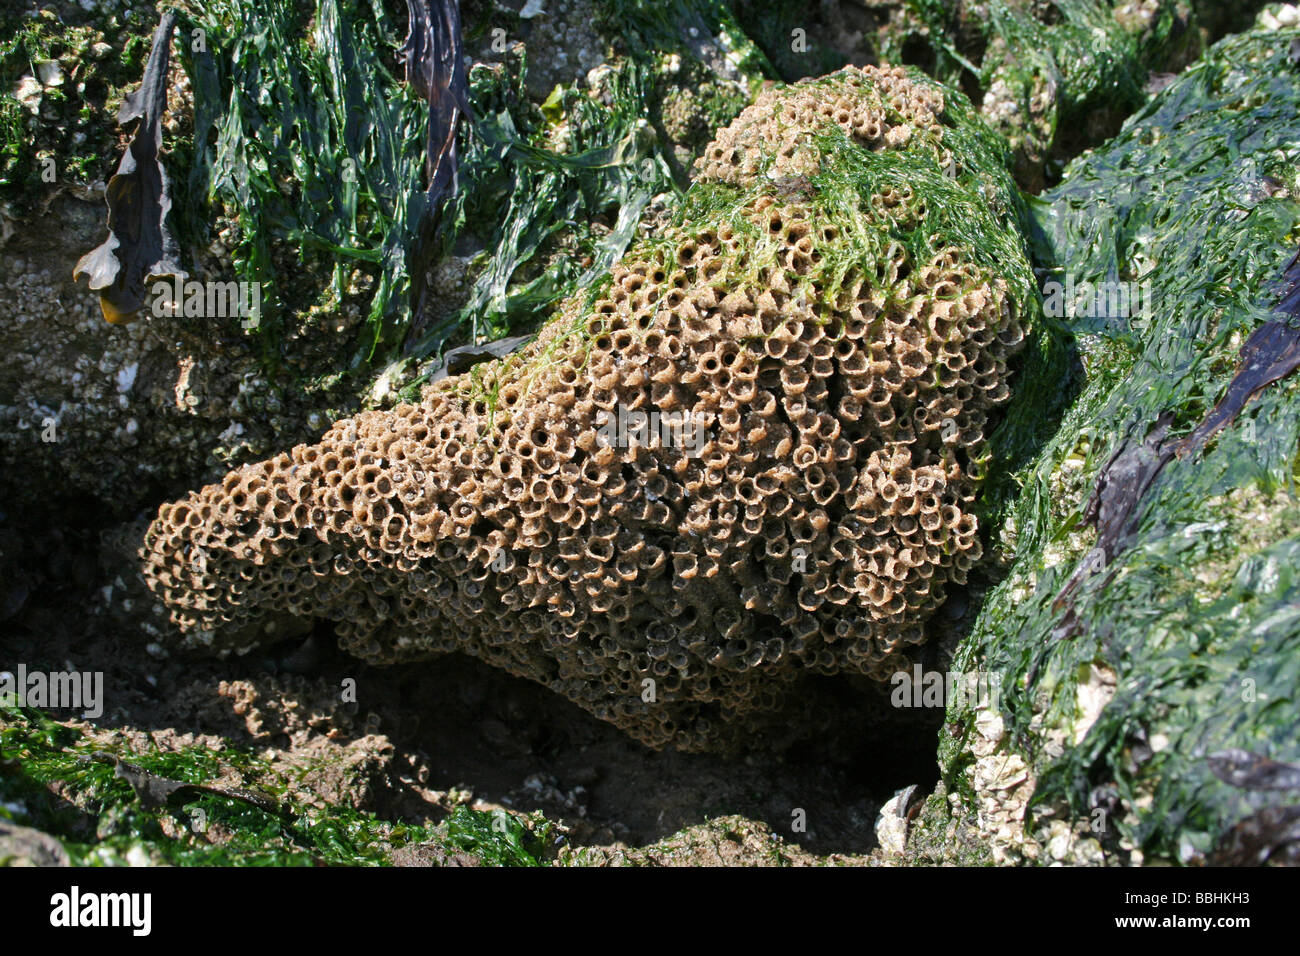 Reef Colony Of The Honeycomb Worm Sabellaria alveolata At New Brighton, Wallasey, The Wirral, Merseyside, UK Stock Photo